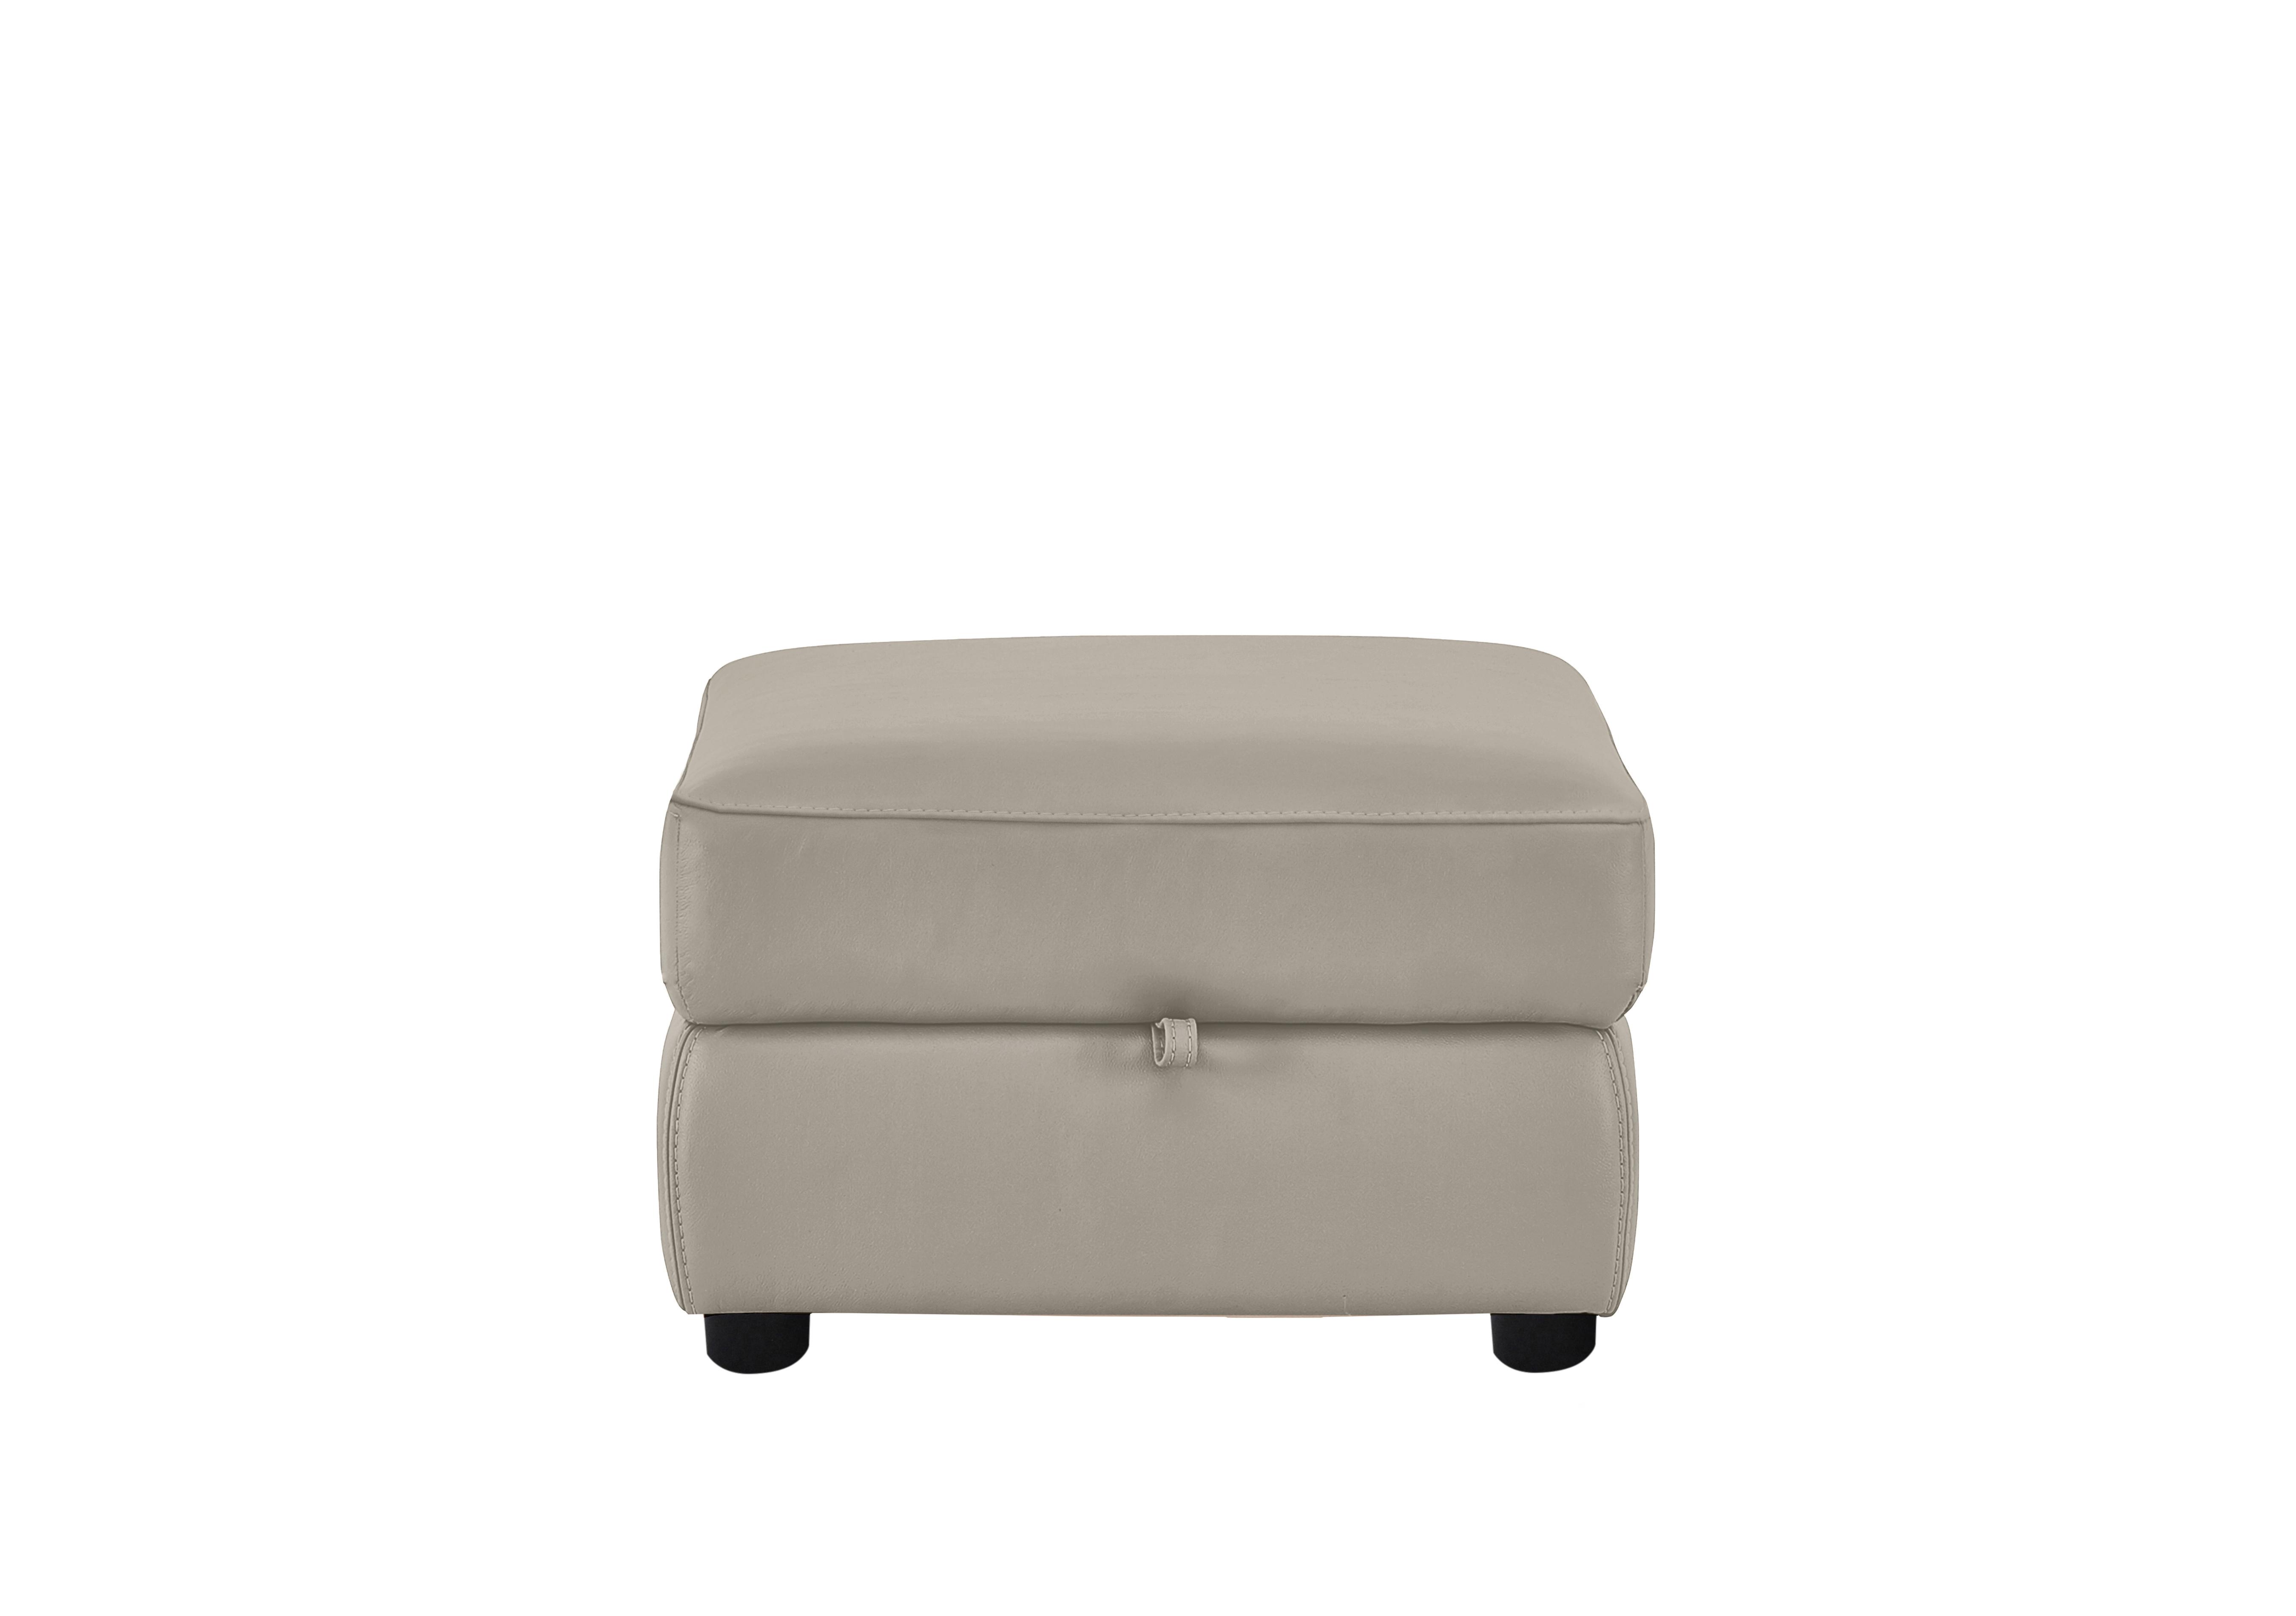 Snug Leather Storage Footstool in Bv-946b Silver Grey on Furniture Village